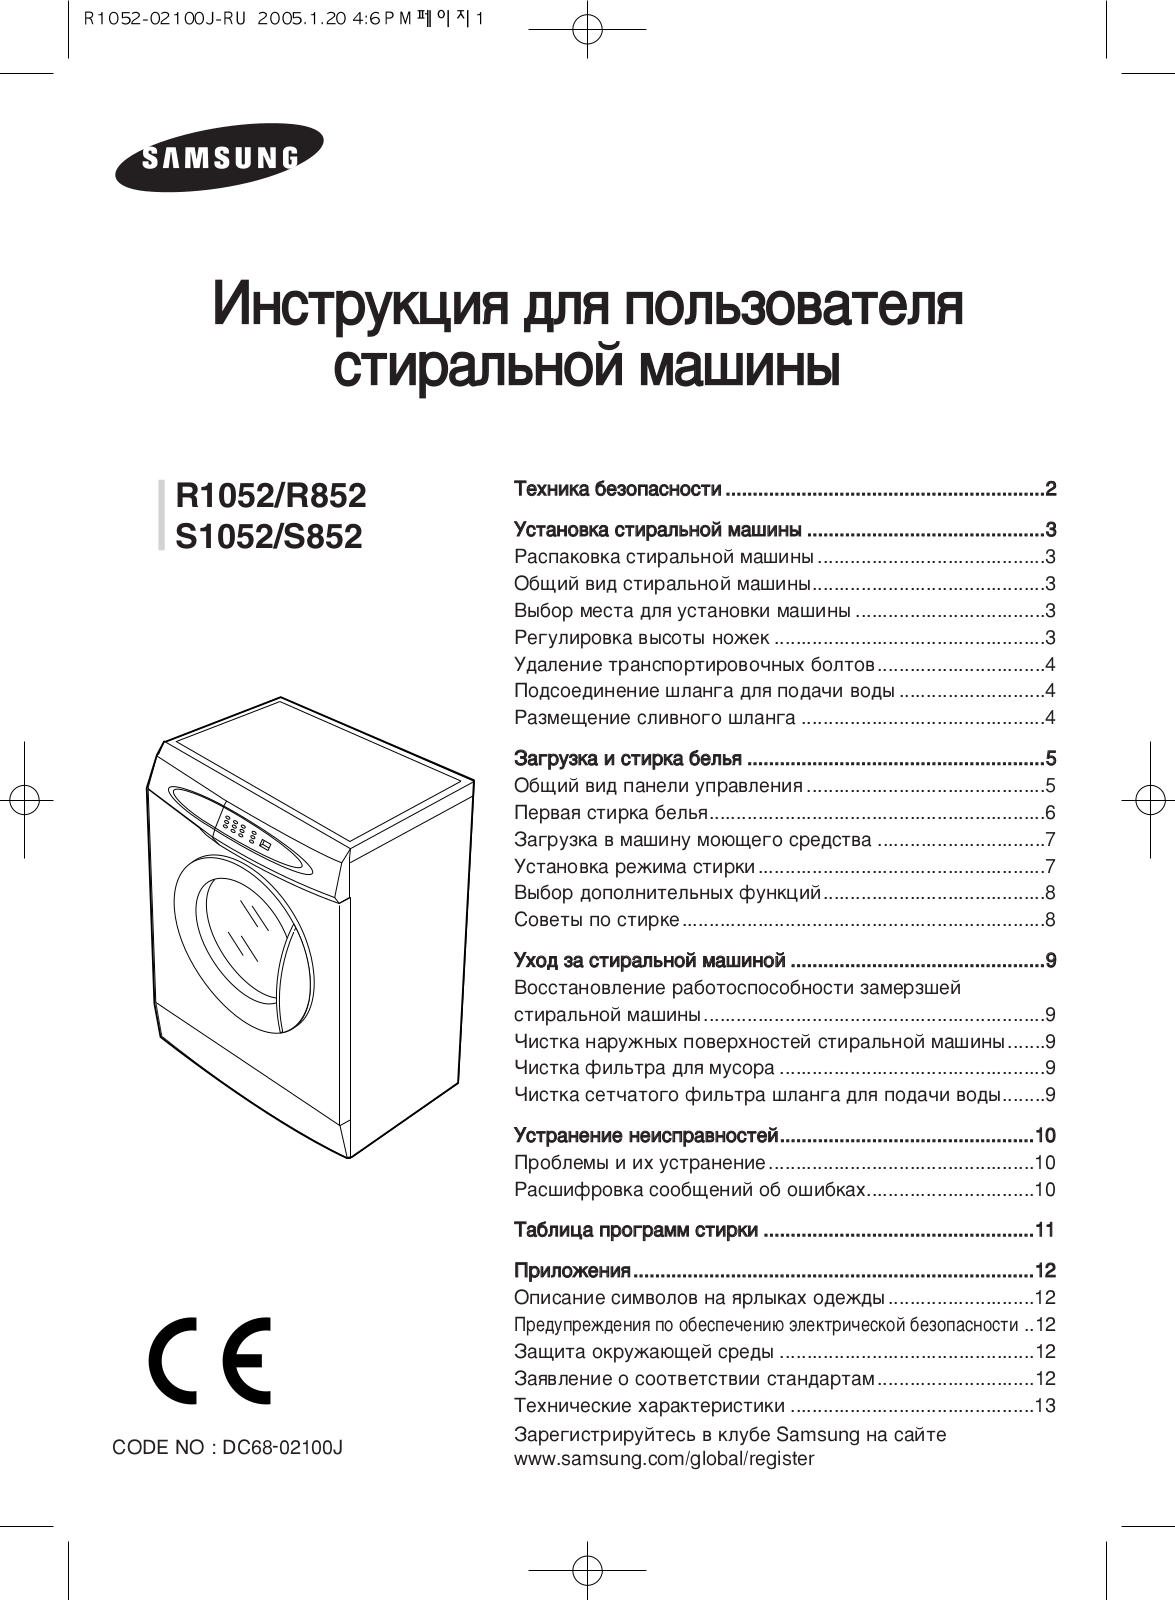 Samsung S1052 User Manual